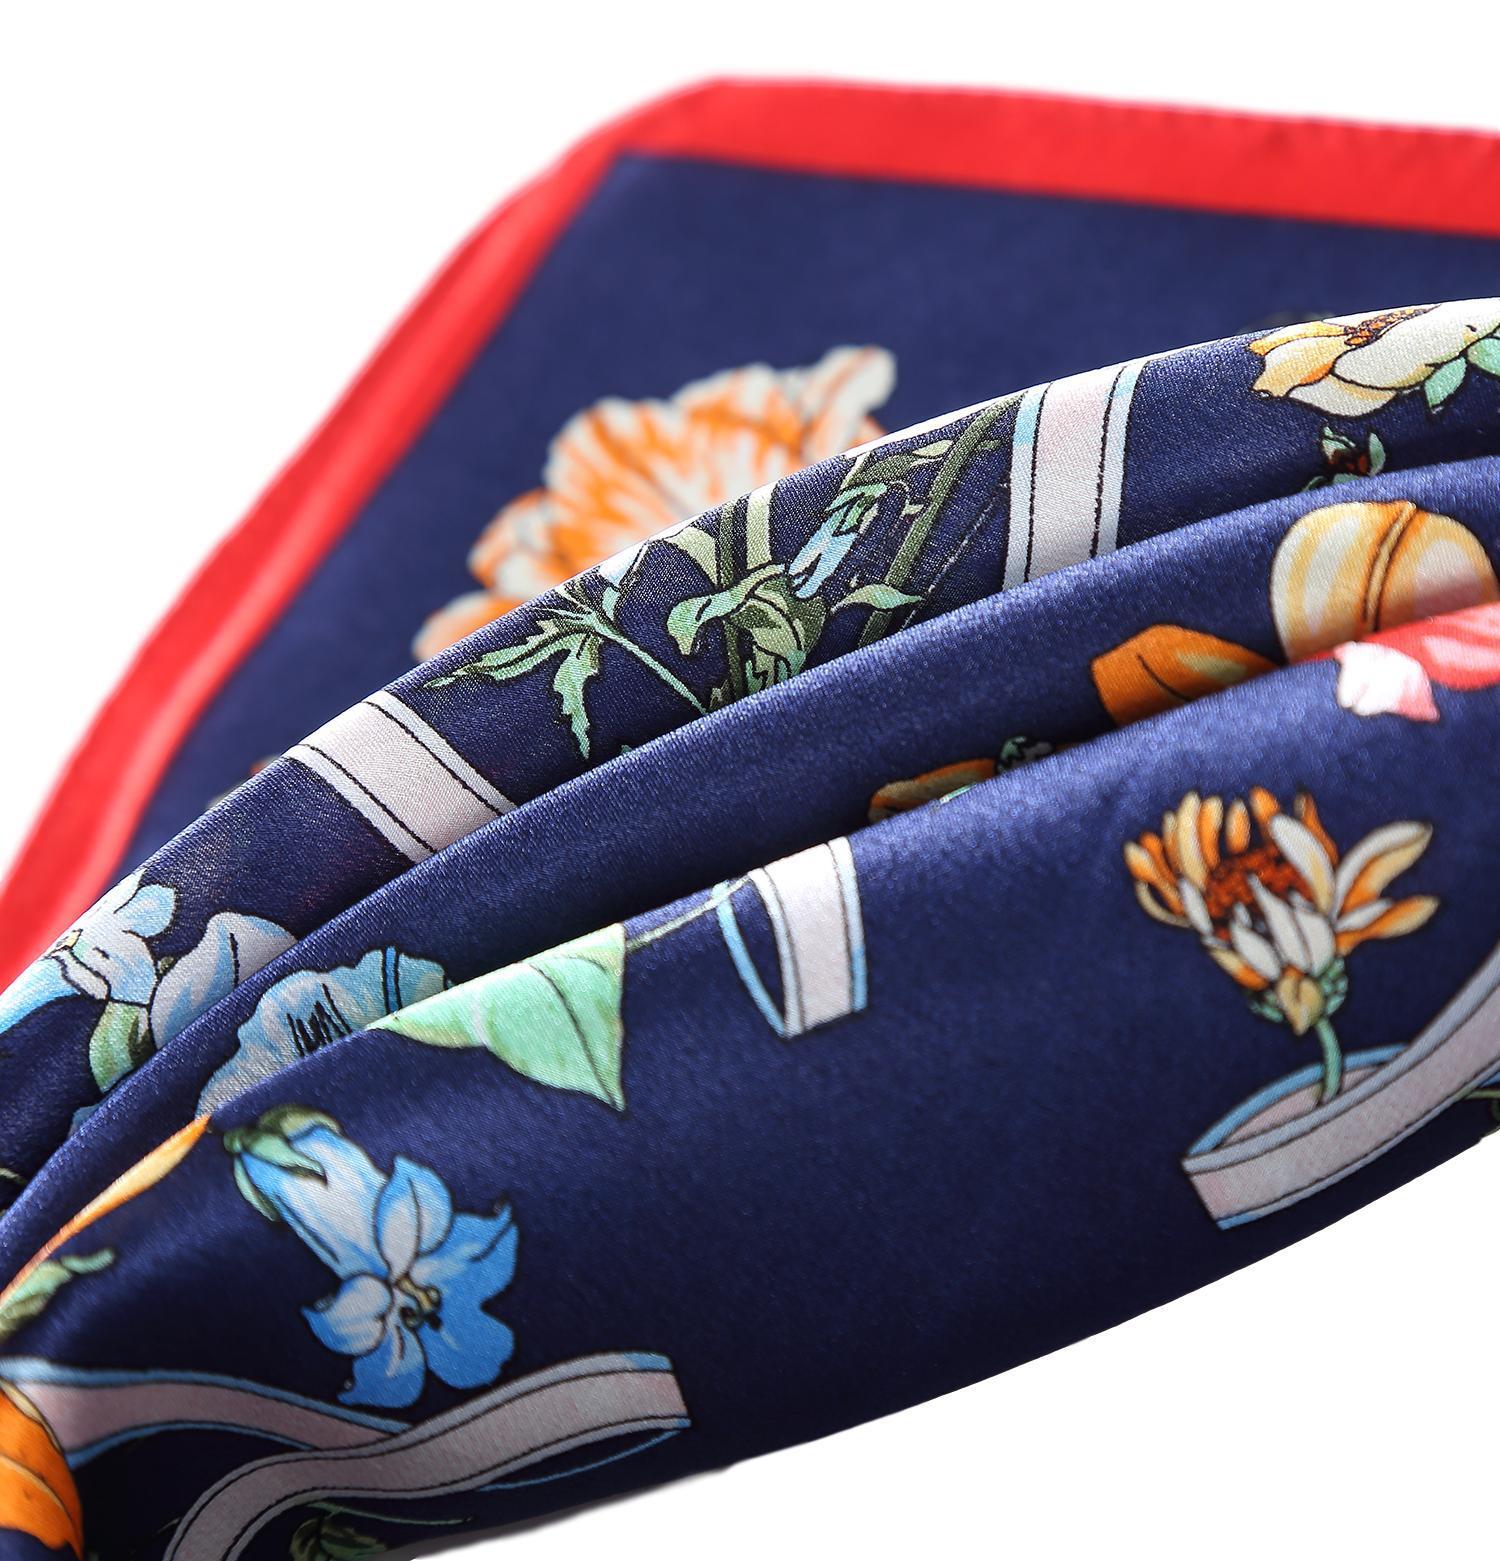 Buy Wrapables 100% Silk Neckerchief Square Scarf, Sailor Stripes Navy at